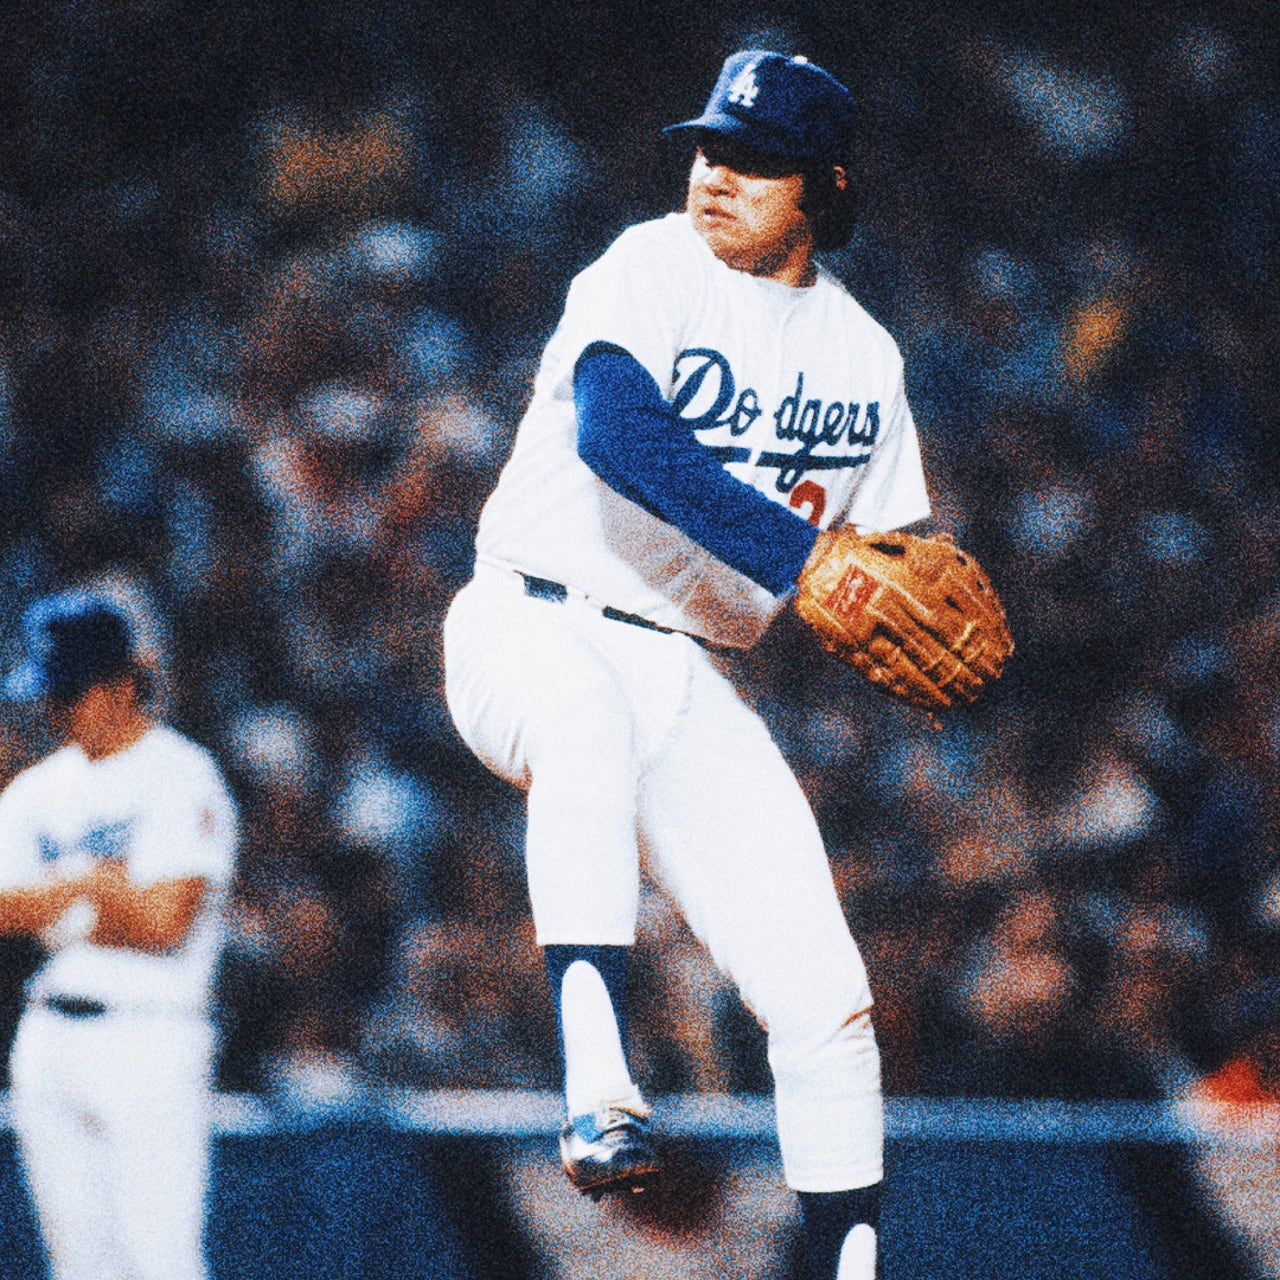 Dodgers, at fans' urging, finally retiring Fernando Valenzuela's